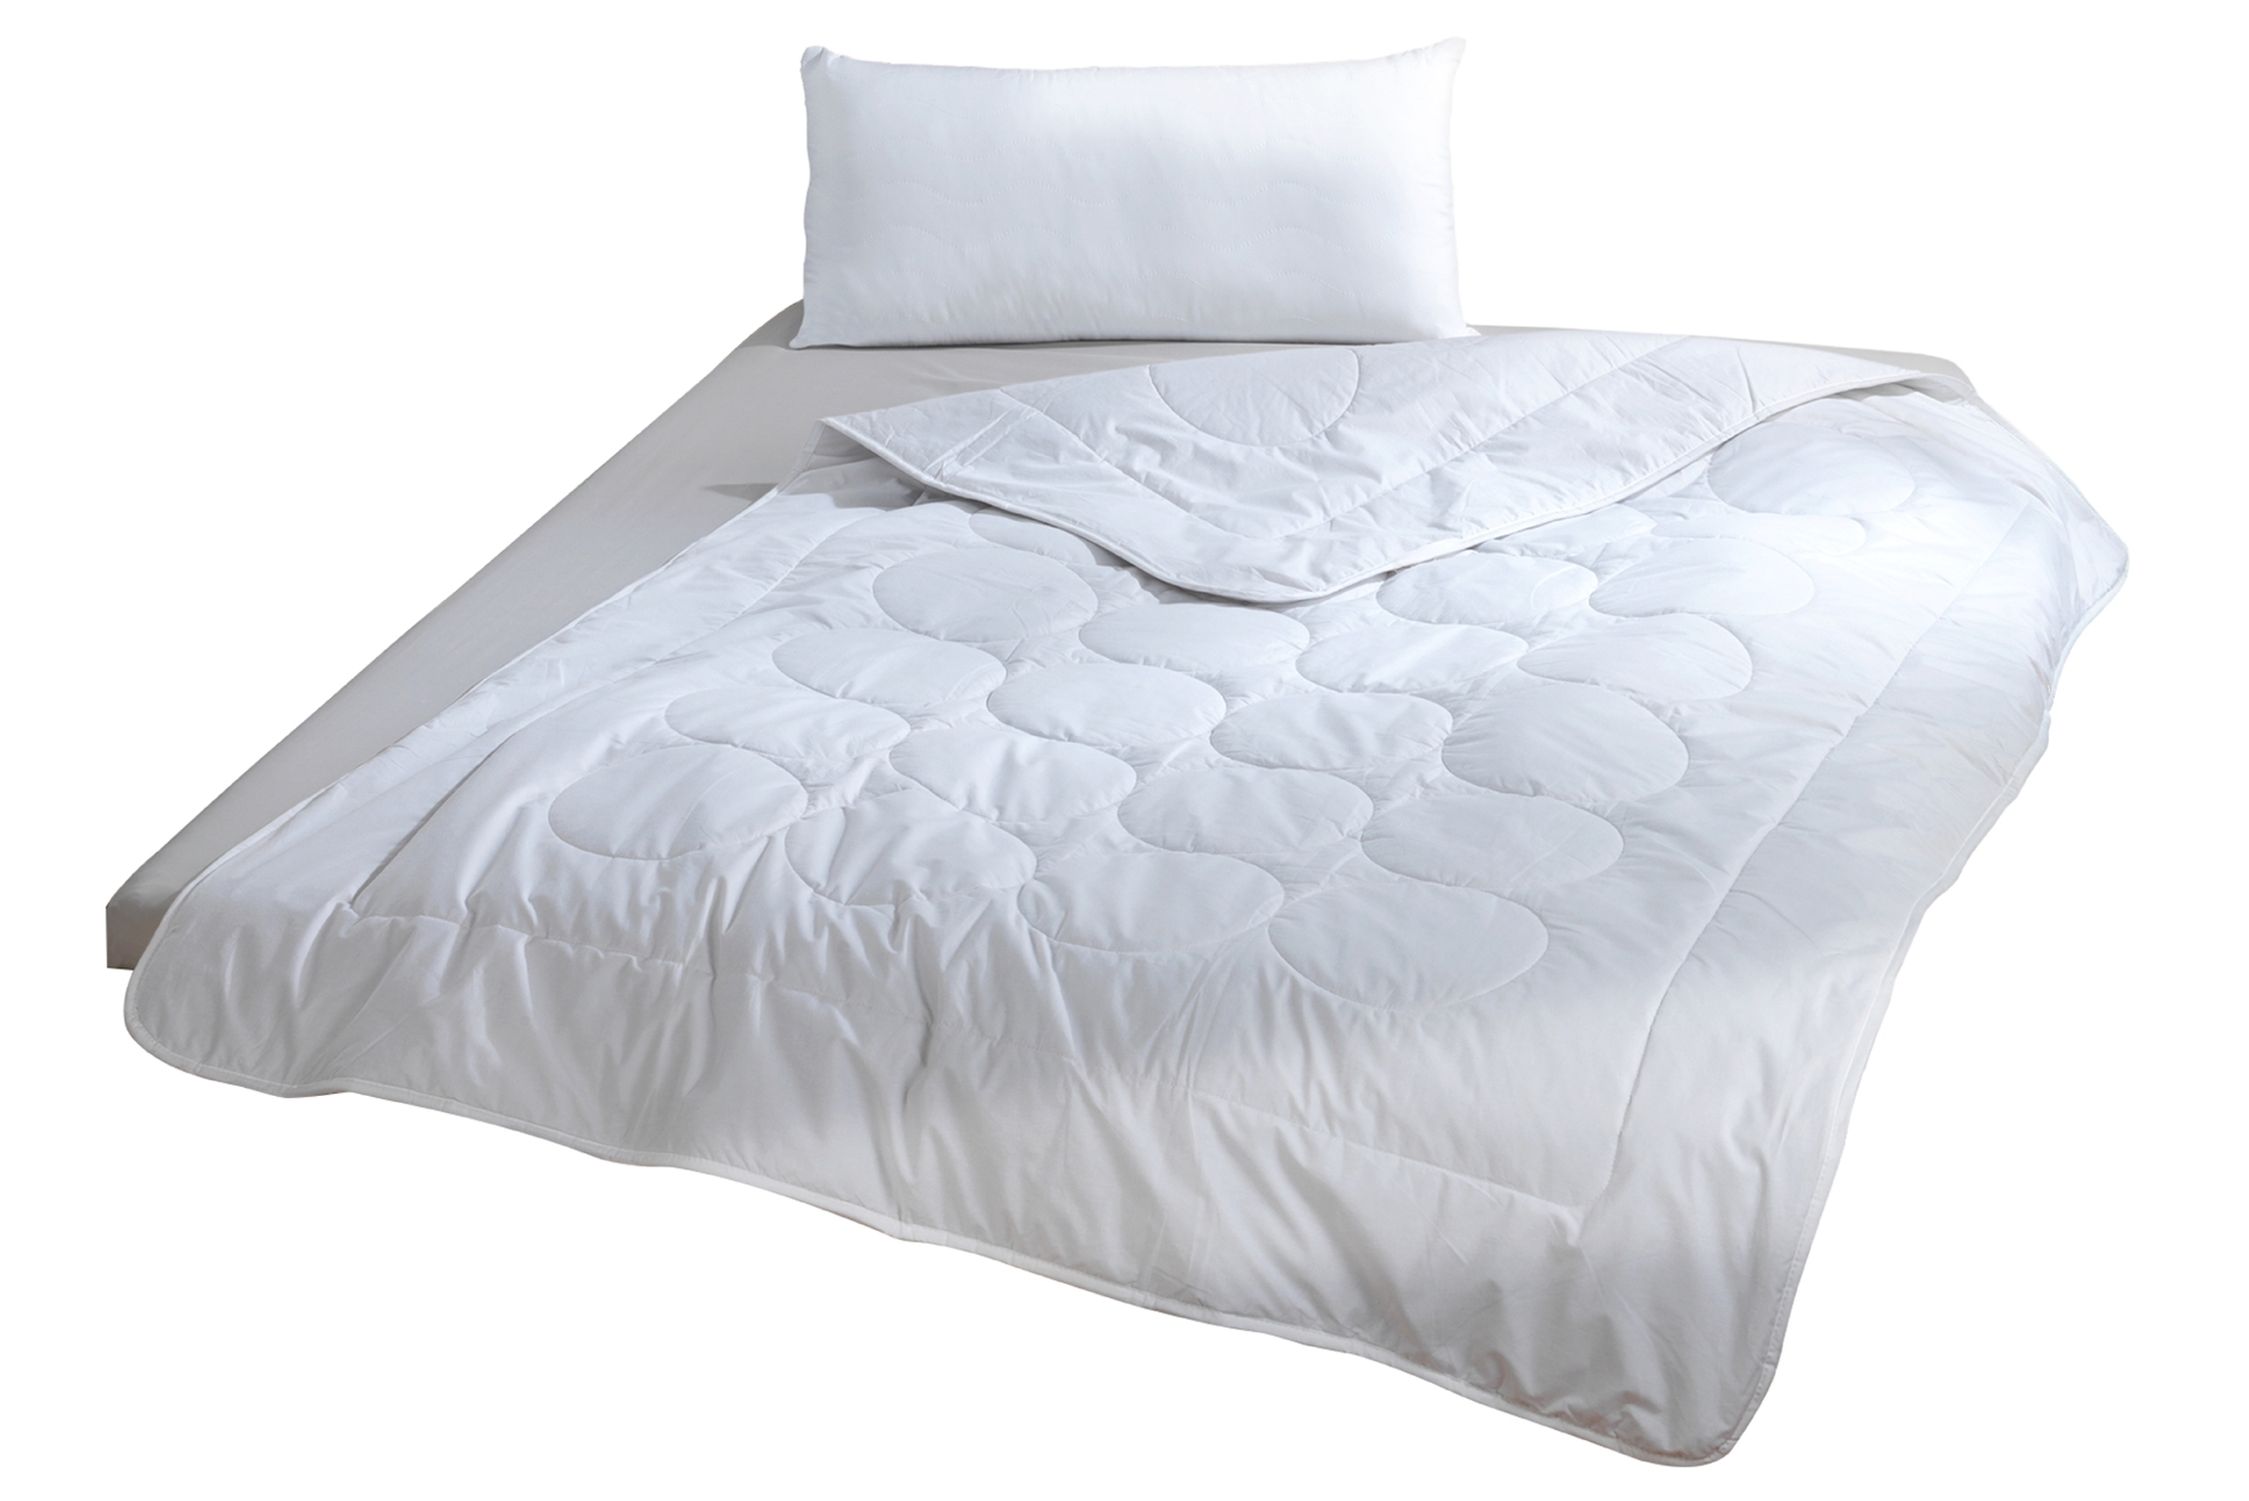 Bettdecke mit Kamelhaar, 135x200cm online kaufen - Orbisana